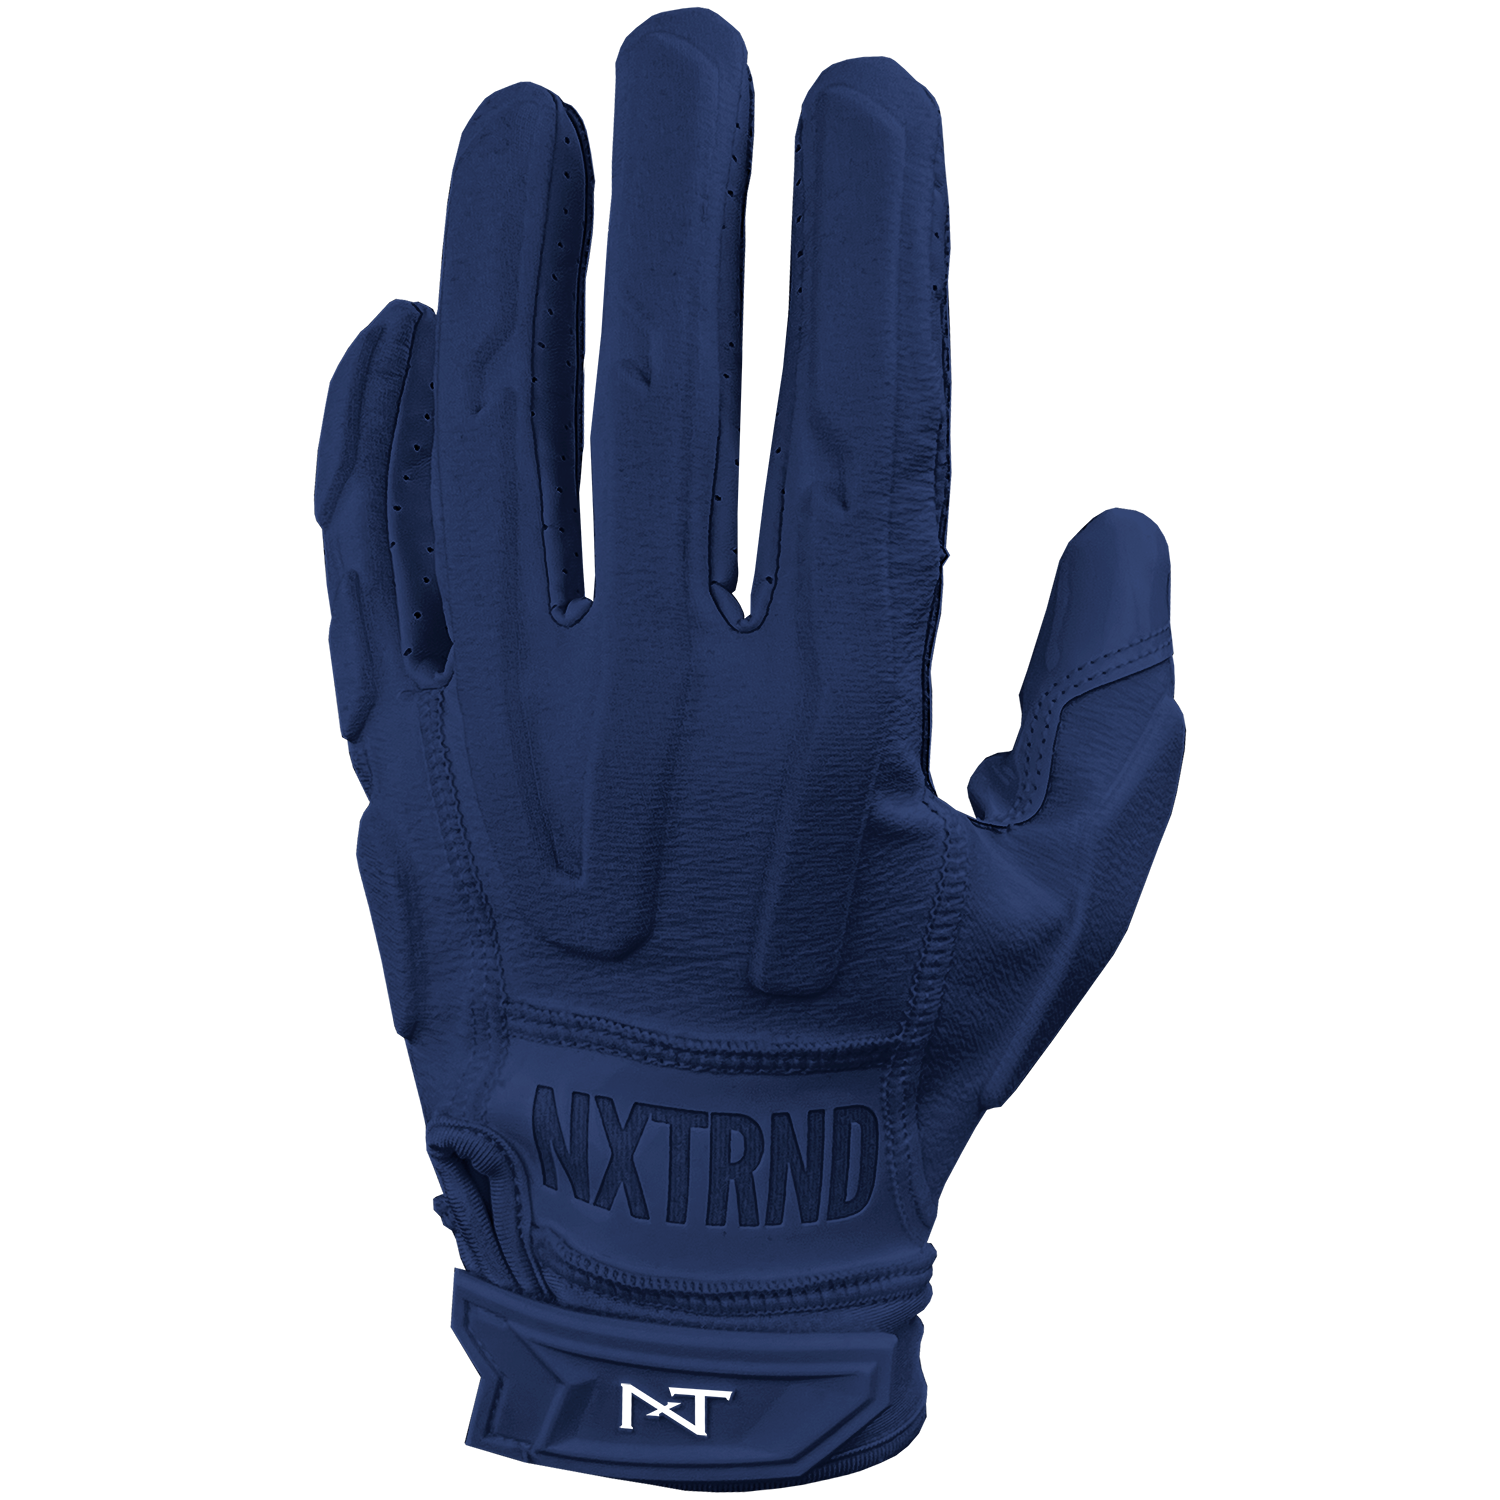 NXTRND G3™ Padded Football Gloves Orange